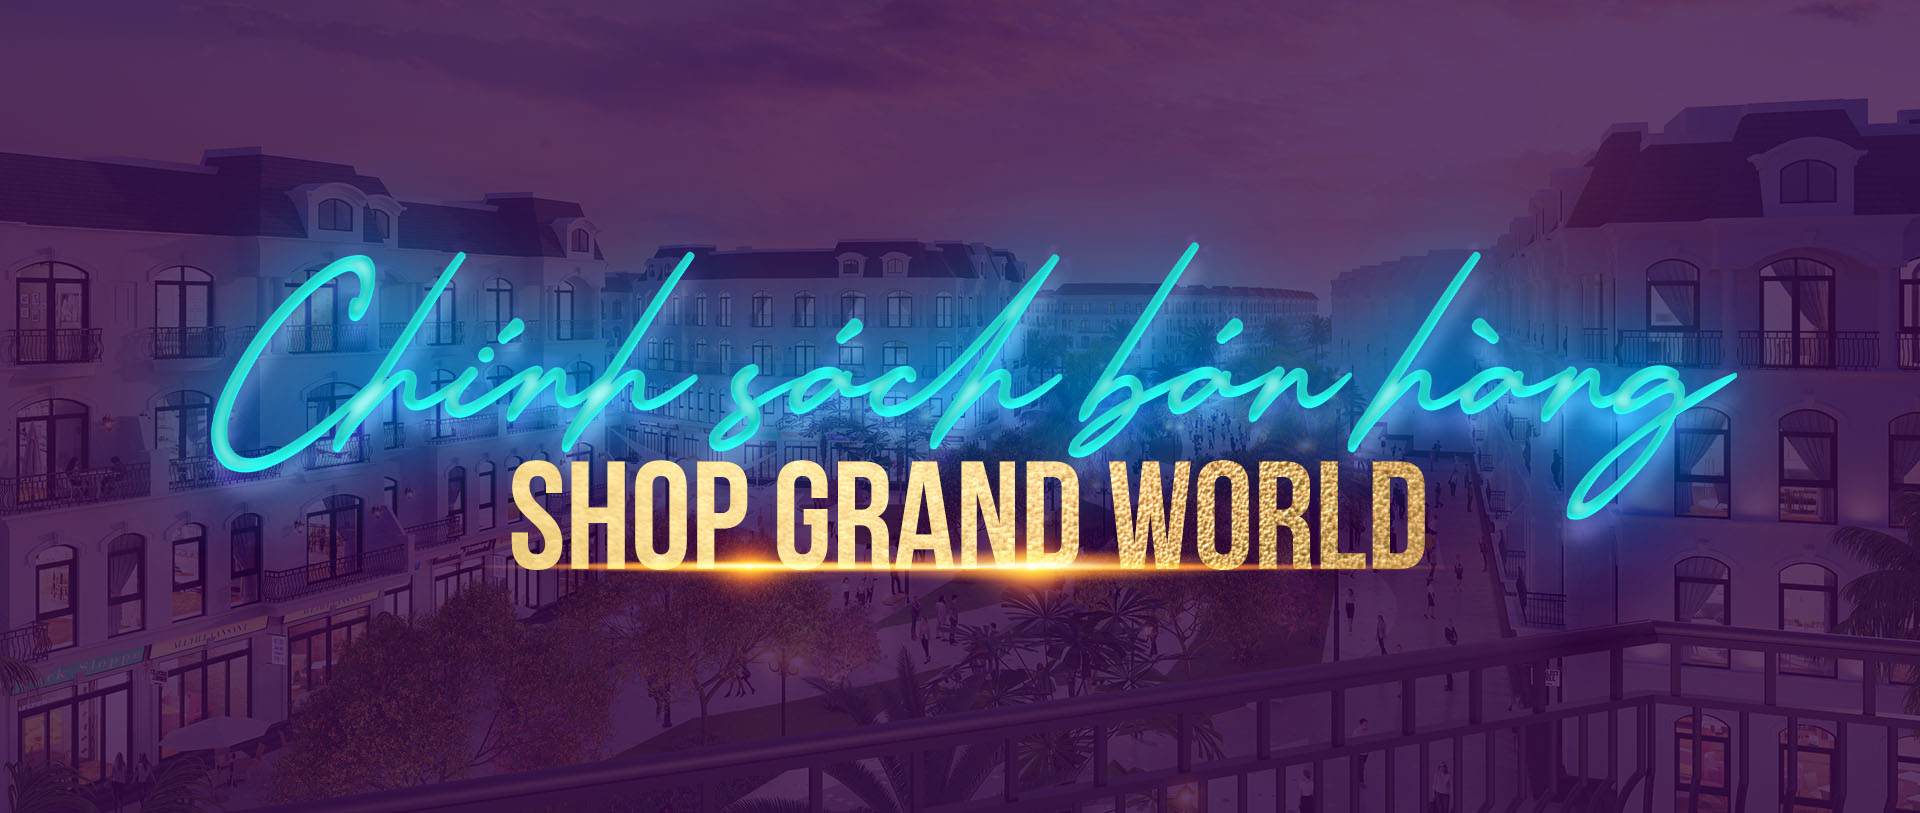 Dự án shophouse Grand World Phú Quốc - Vinpearl Phú Quốc